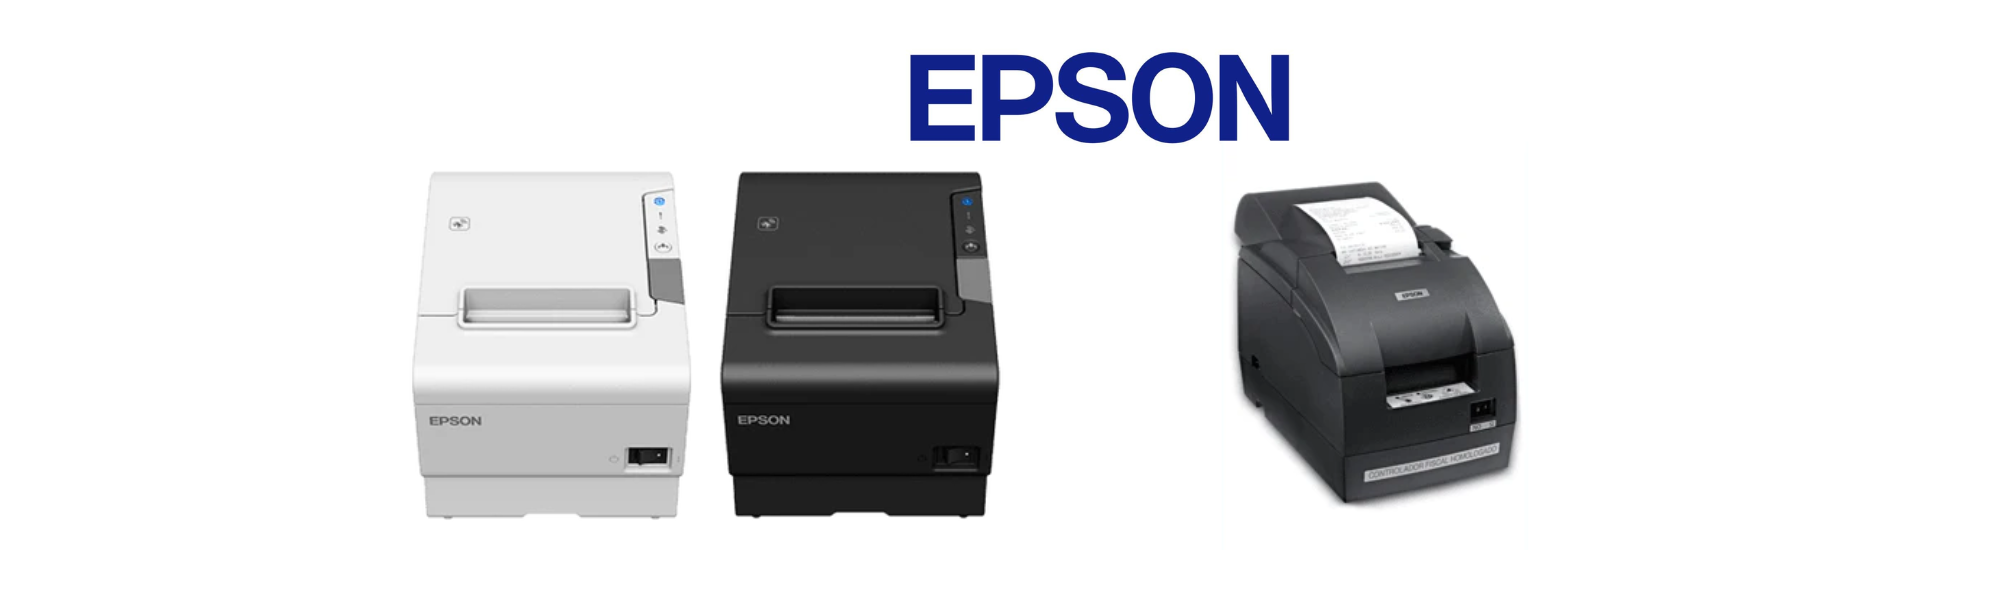 Epson POS Printer: Your Trustworthy Business Partner